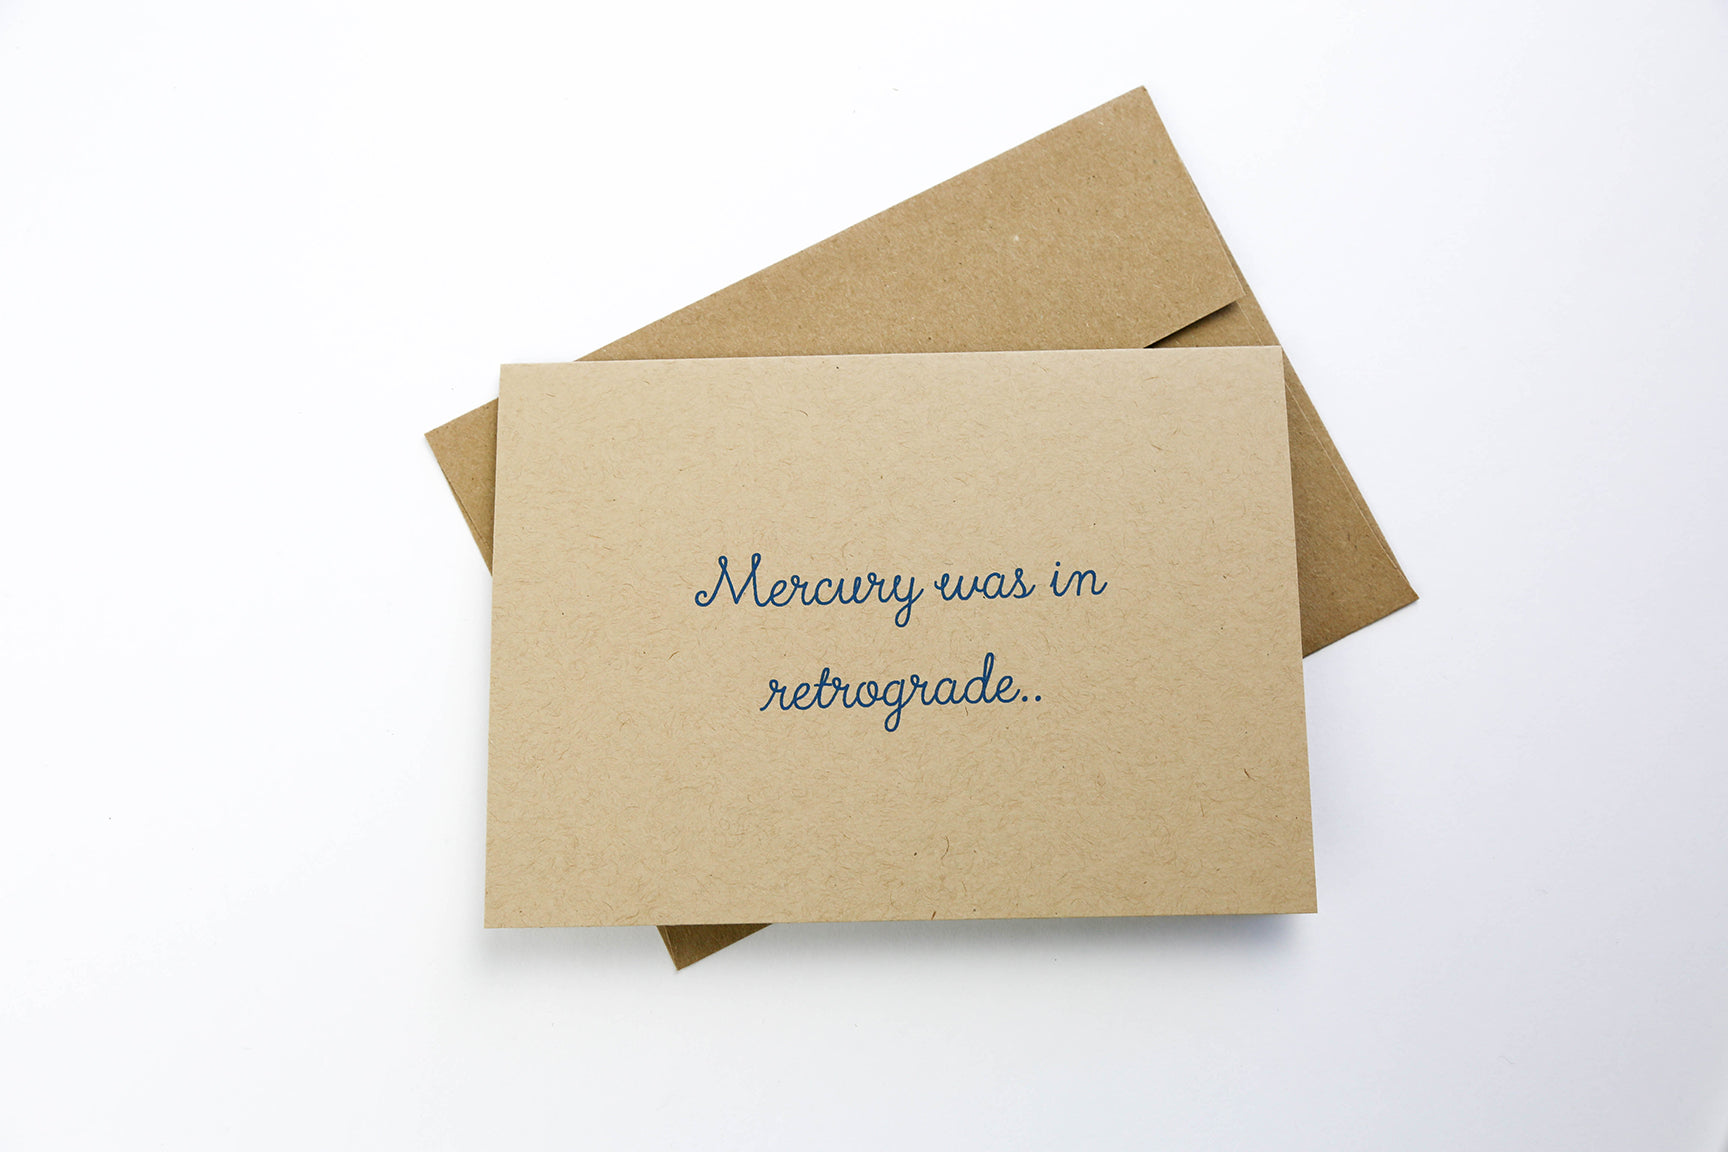 Mercury was in retrograde - Greeting Card